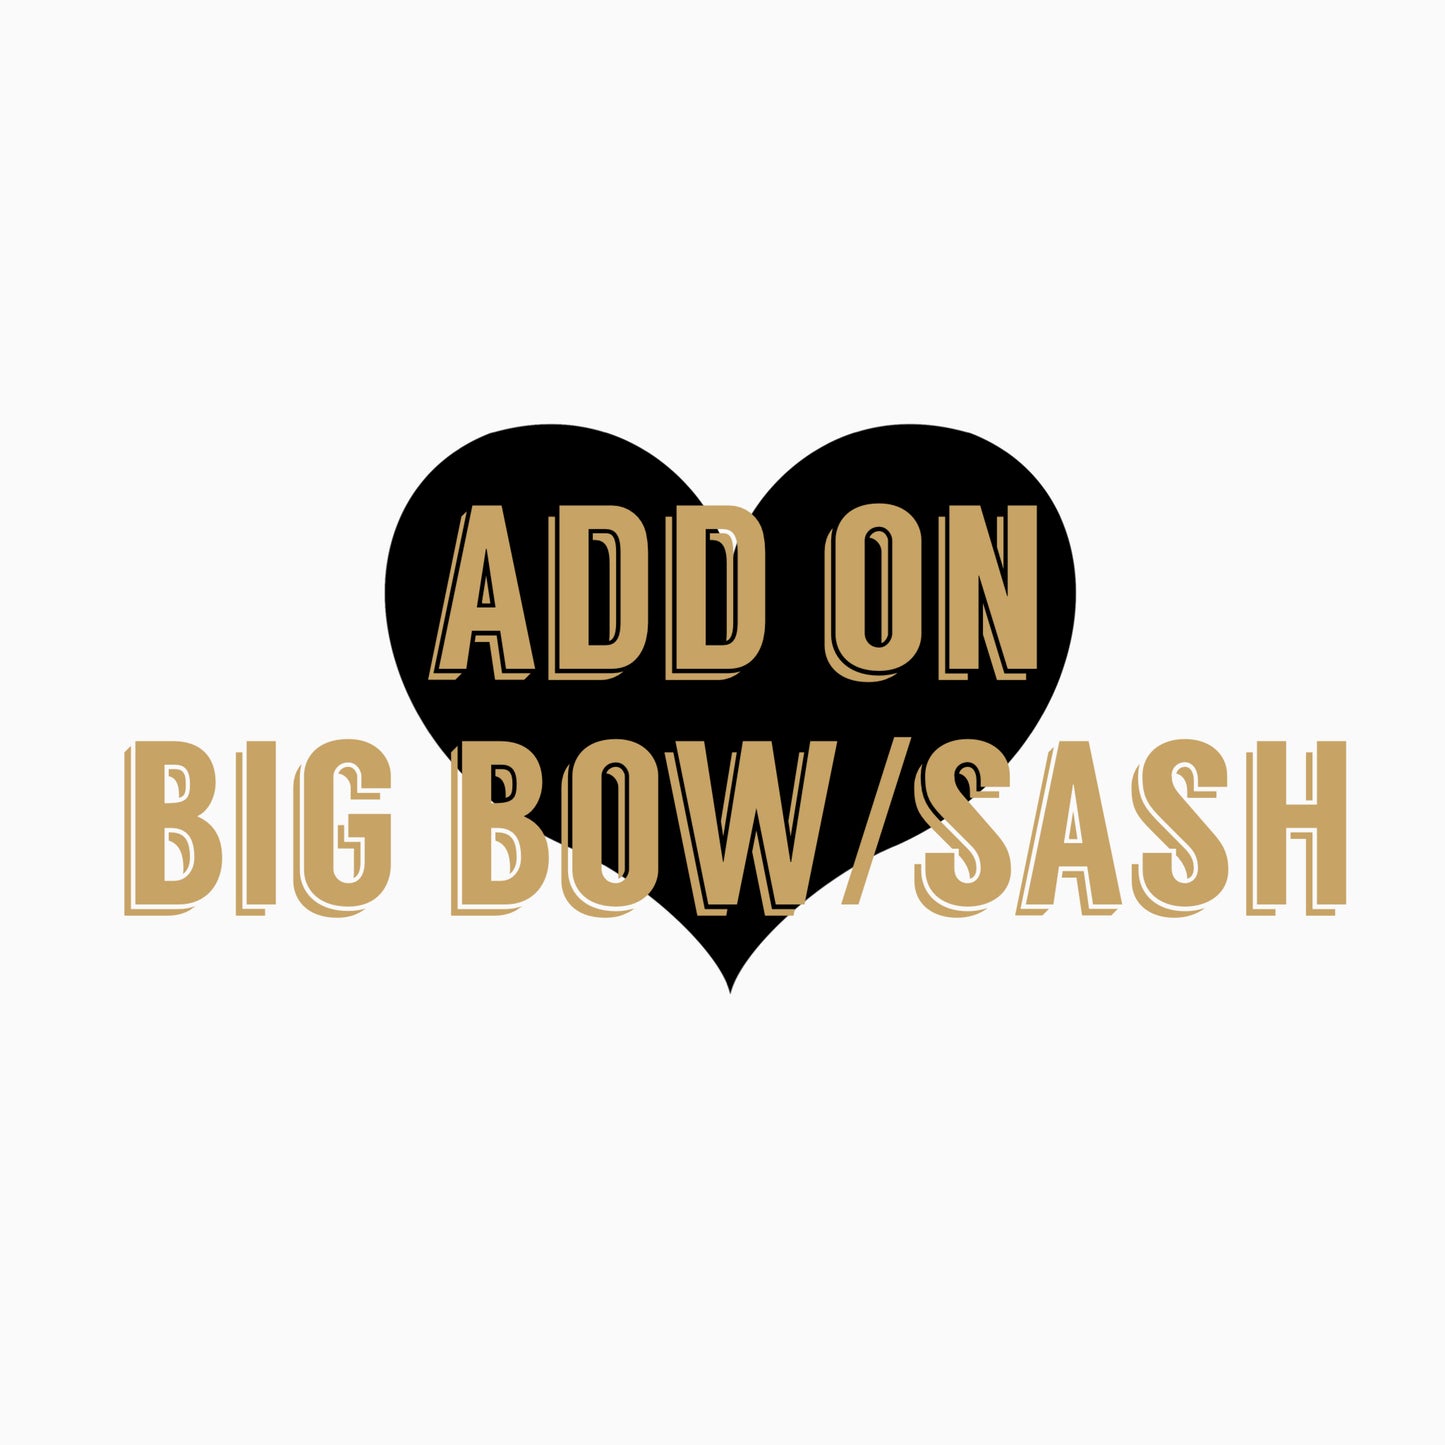 Add on big bow/sash